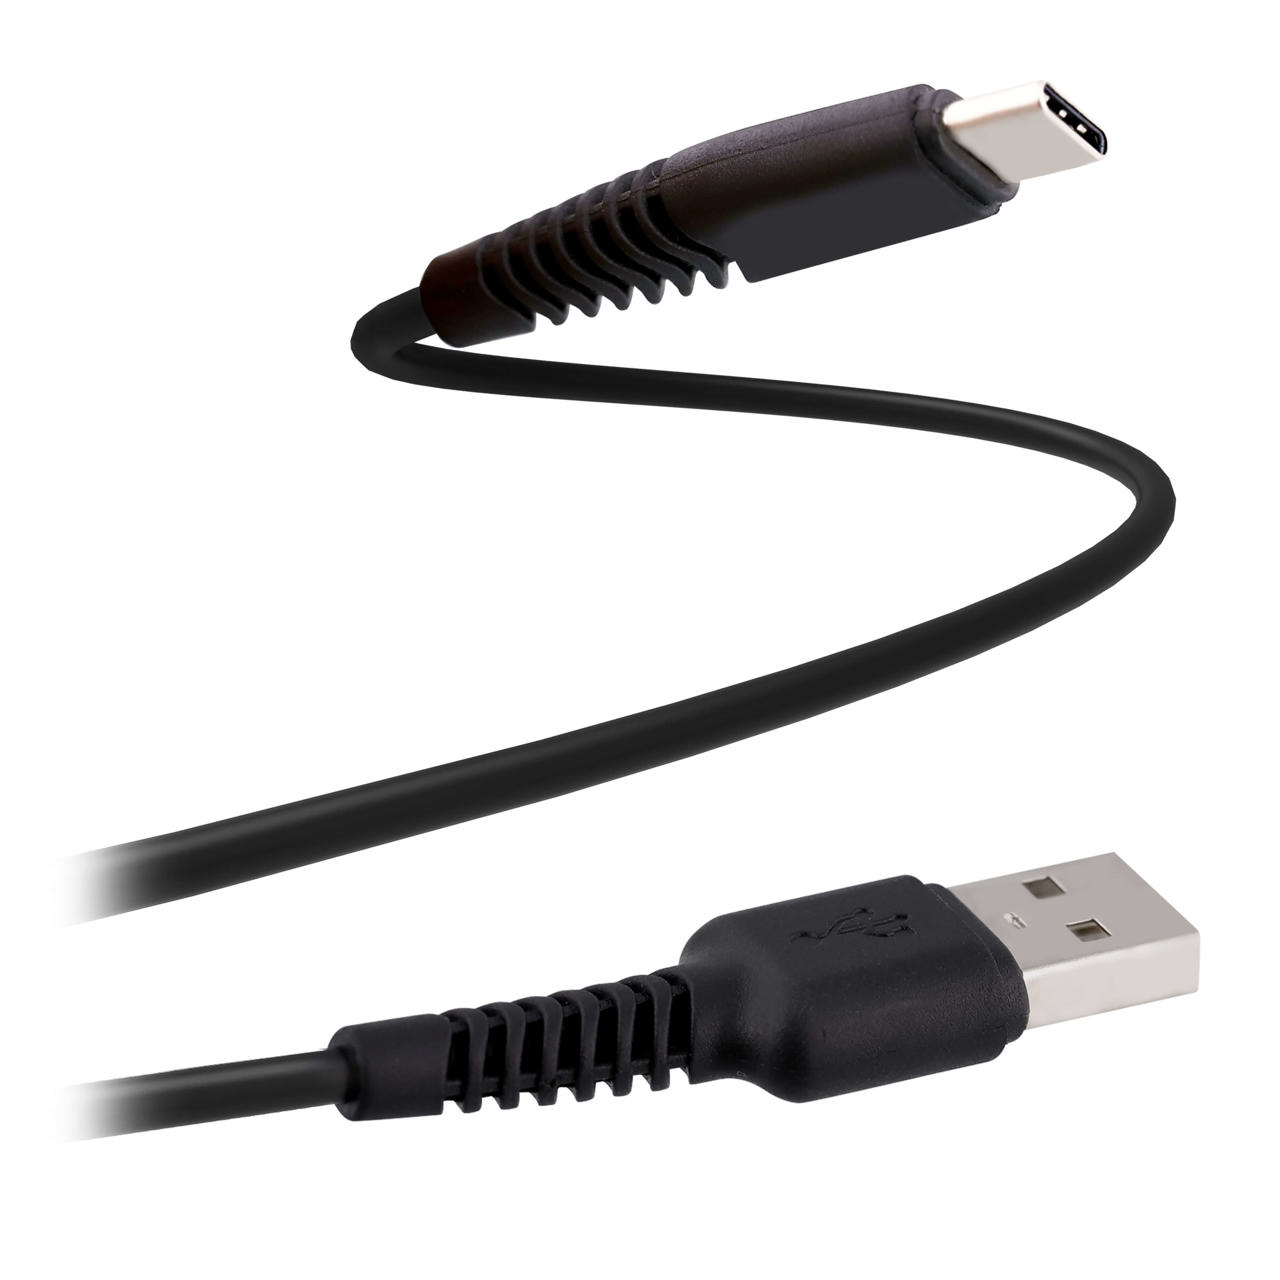 TNB USB-C TO USB 2.0 CABLE 2M